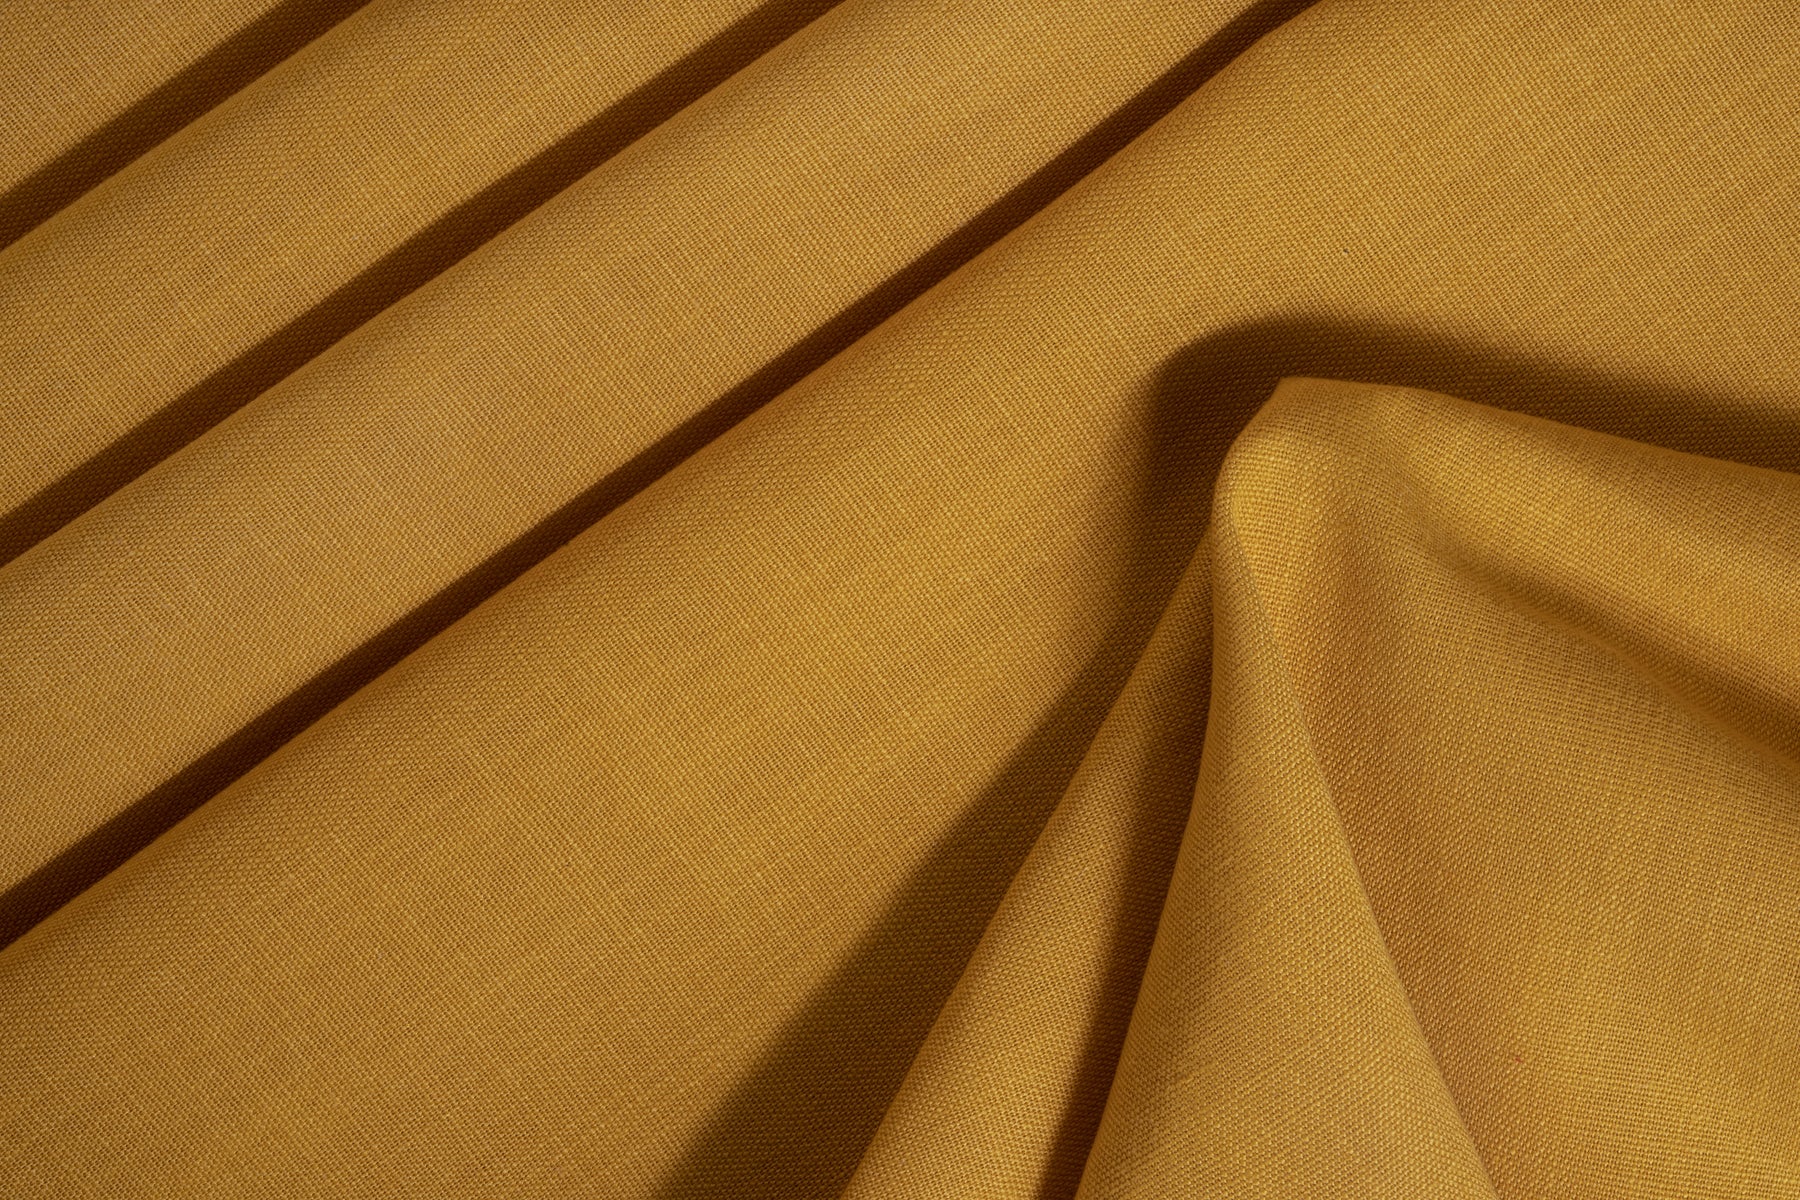 Mustard Linen Textured Placemats 14 x 19 Inch Set of 4 - Mitered Corner